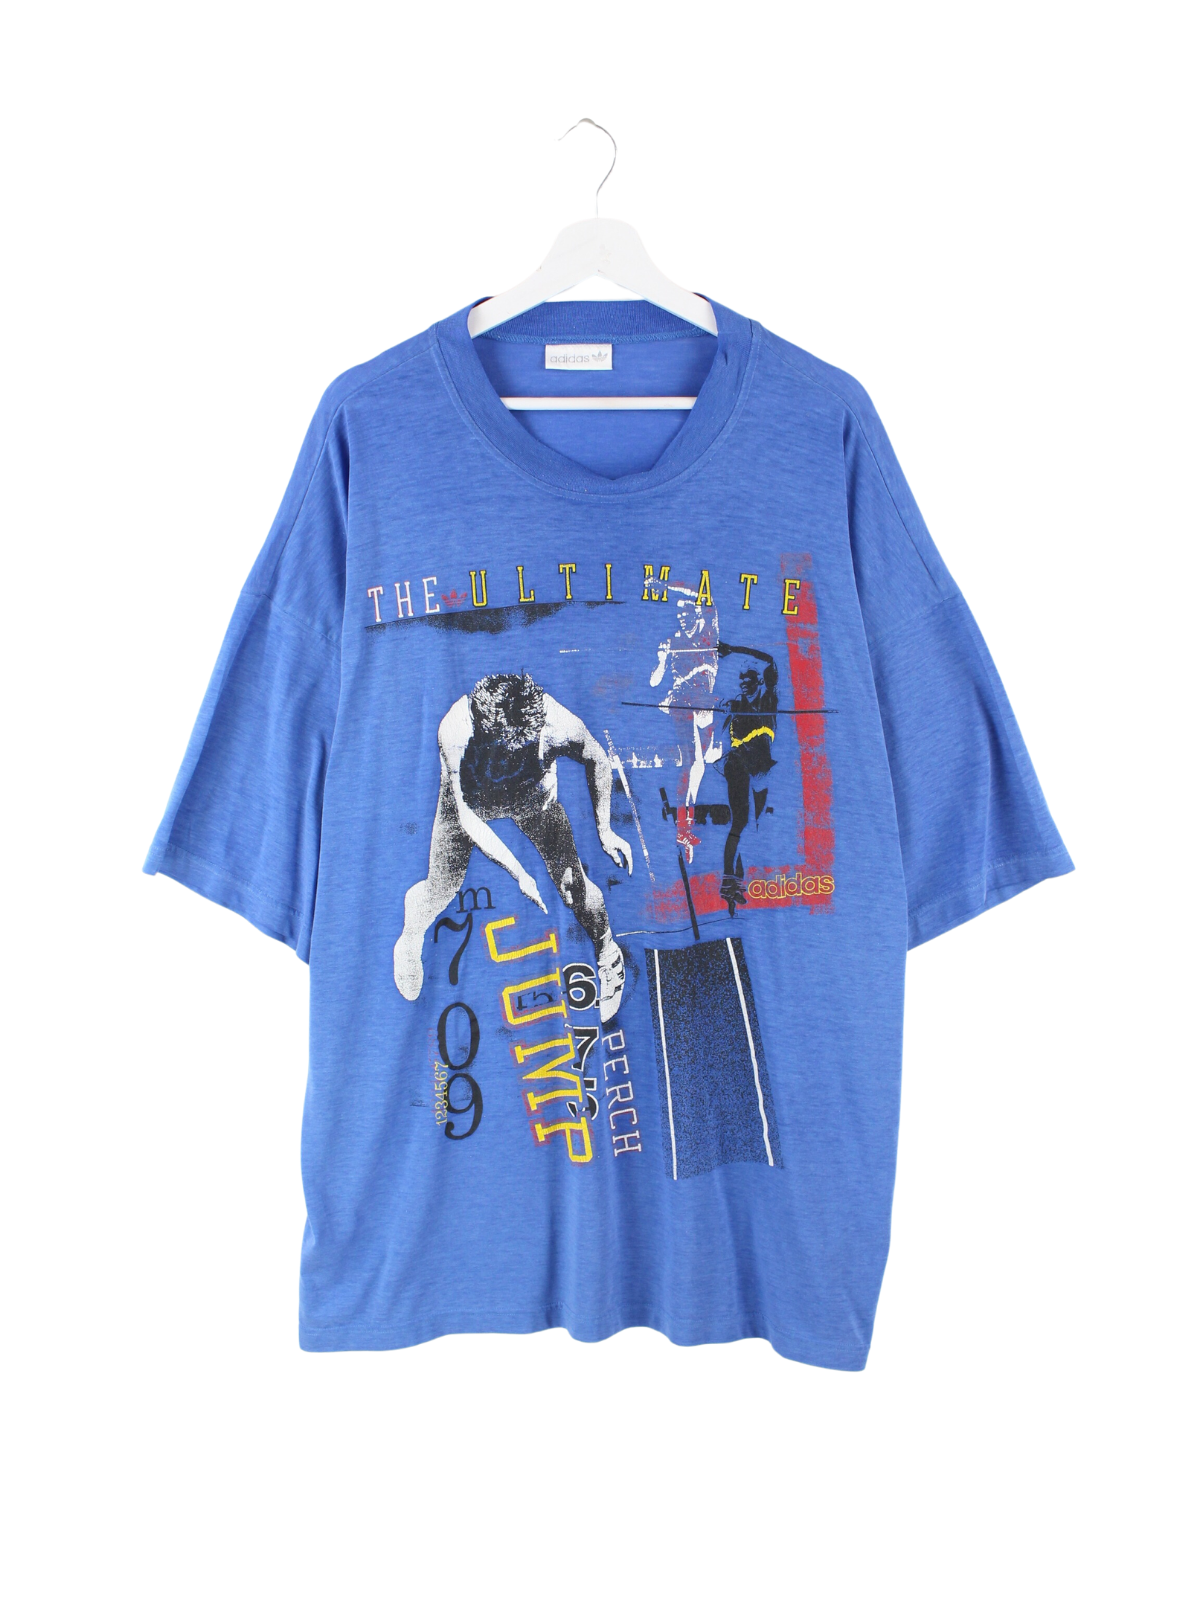 Adidas 80s Print T-Shirt Blau XXL